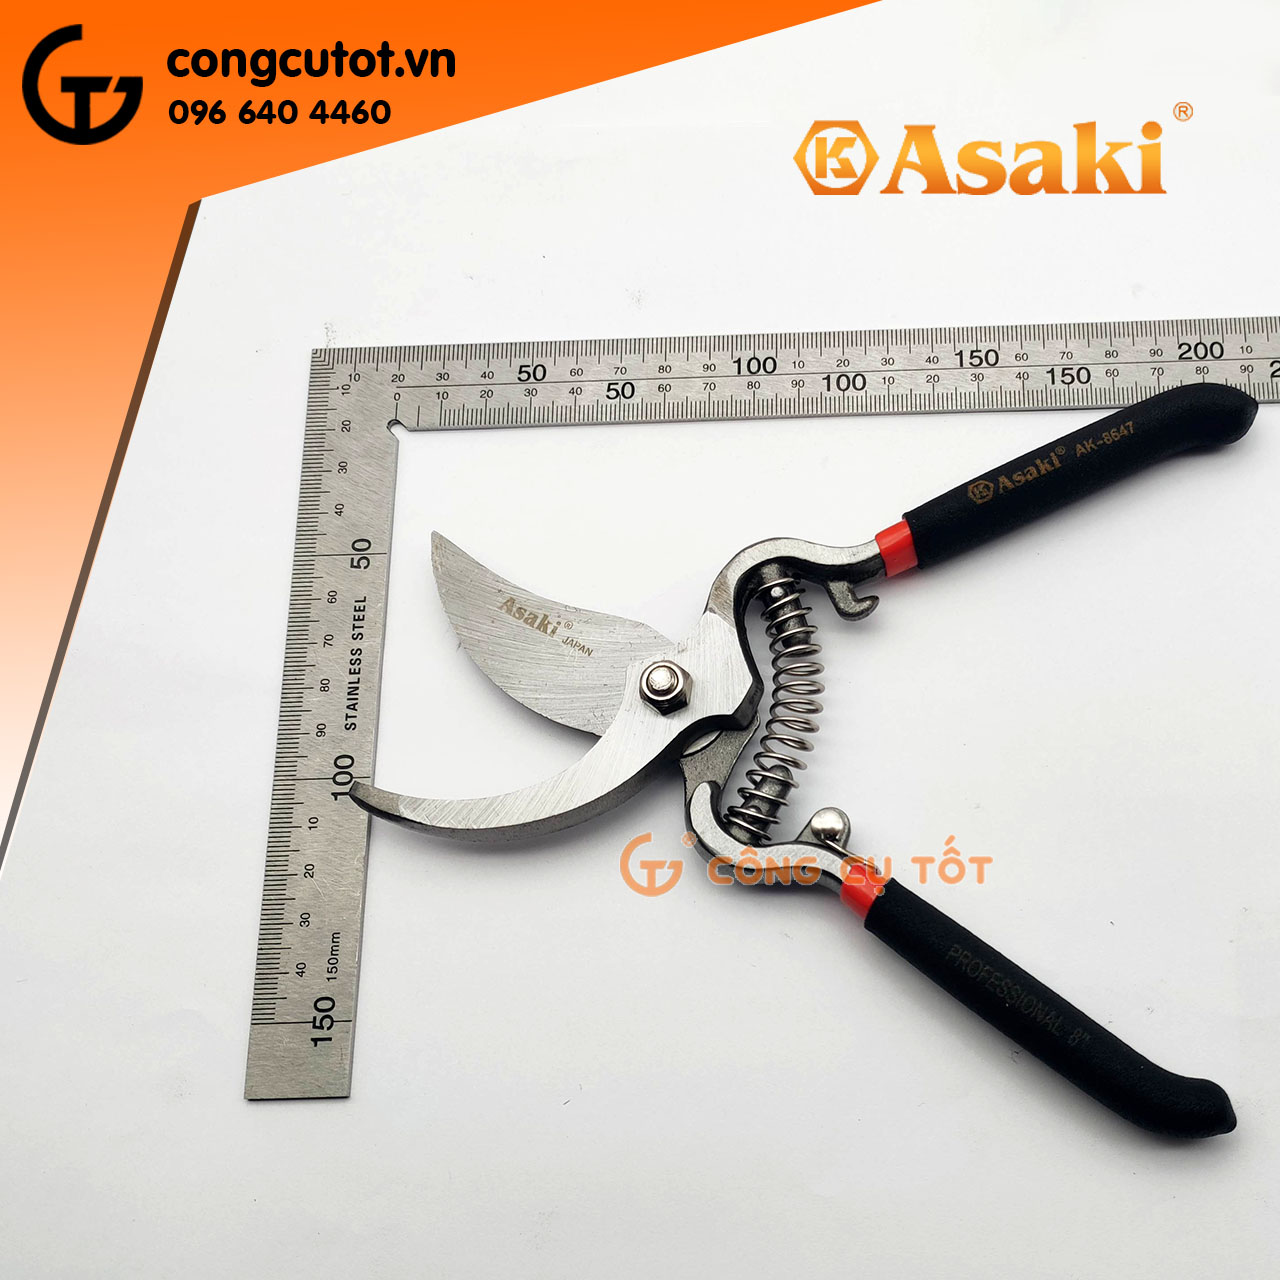 Kéo cắt cành Asaki AK-8647 kích cỡ